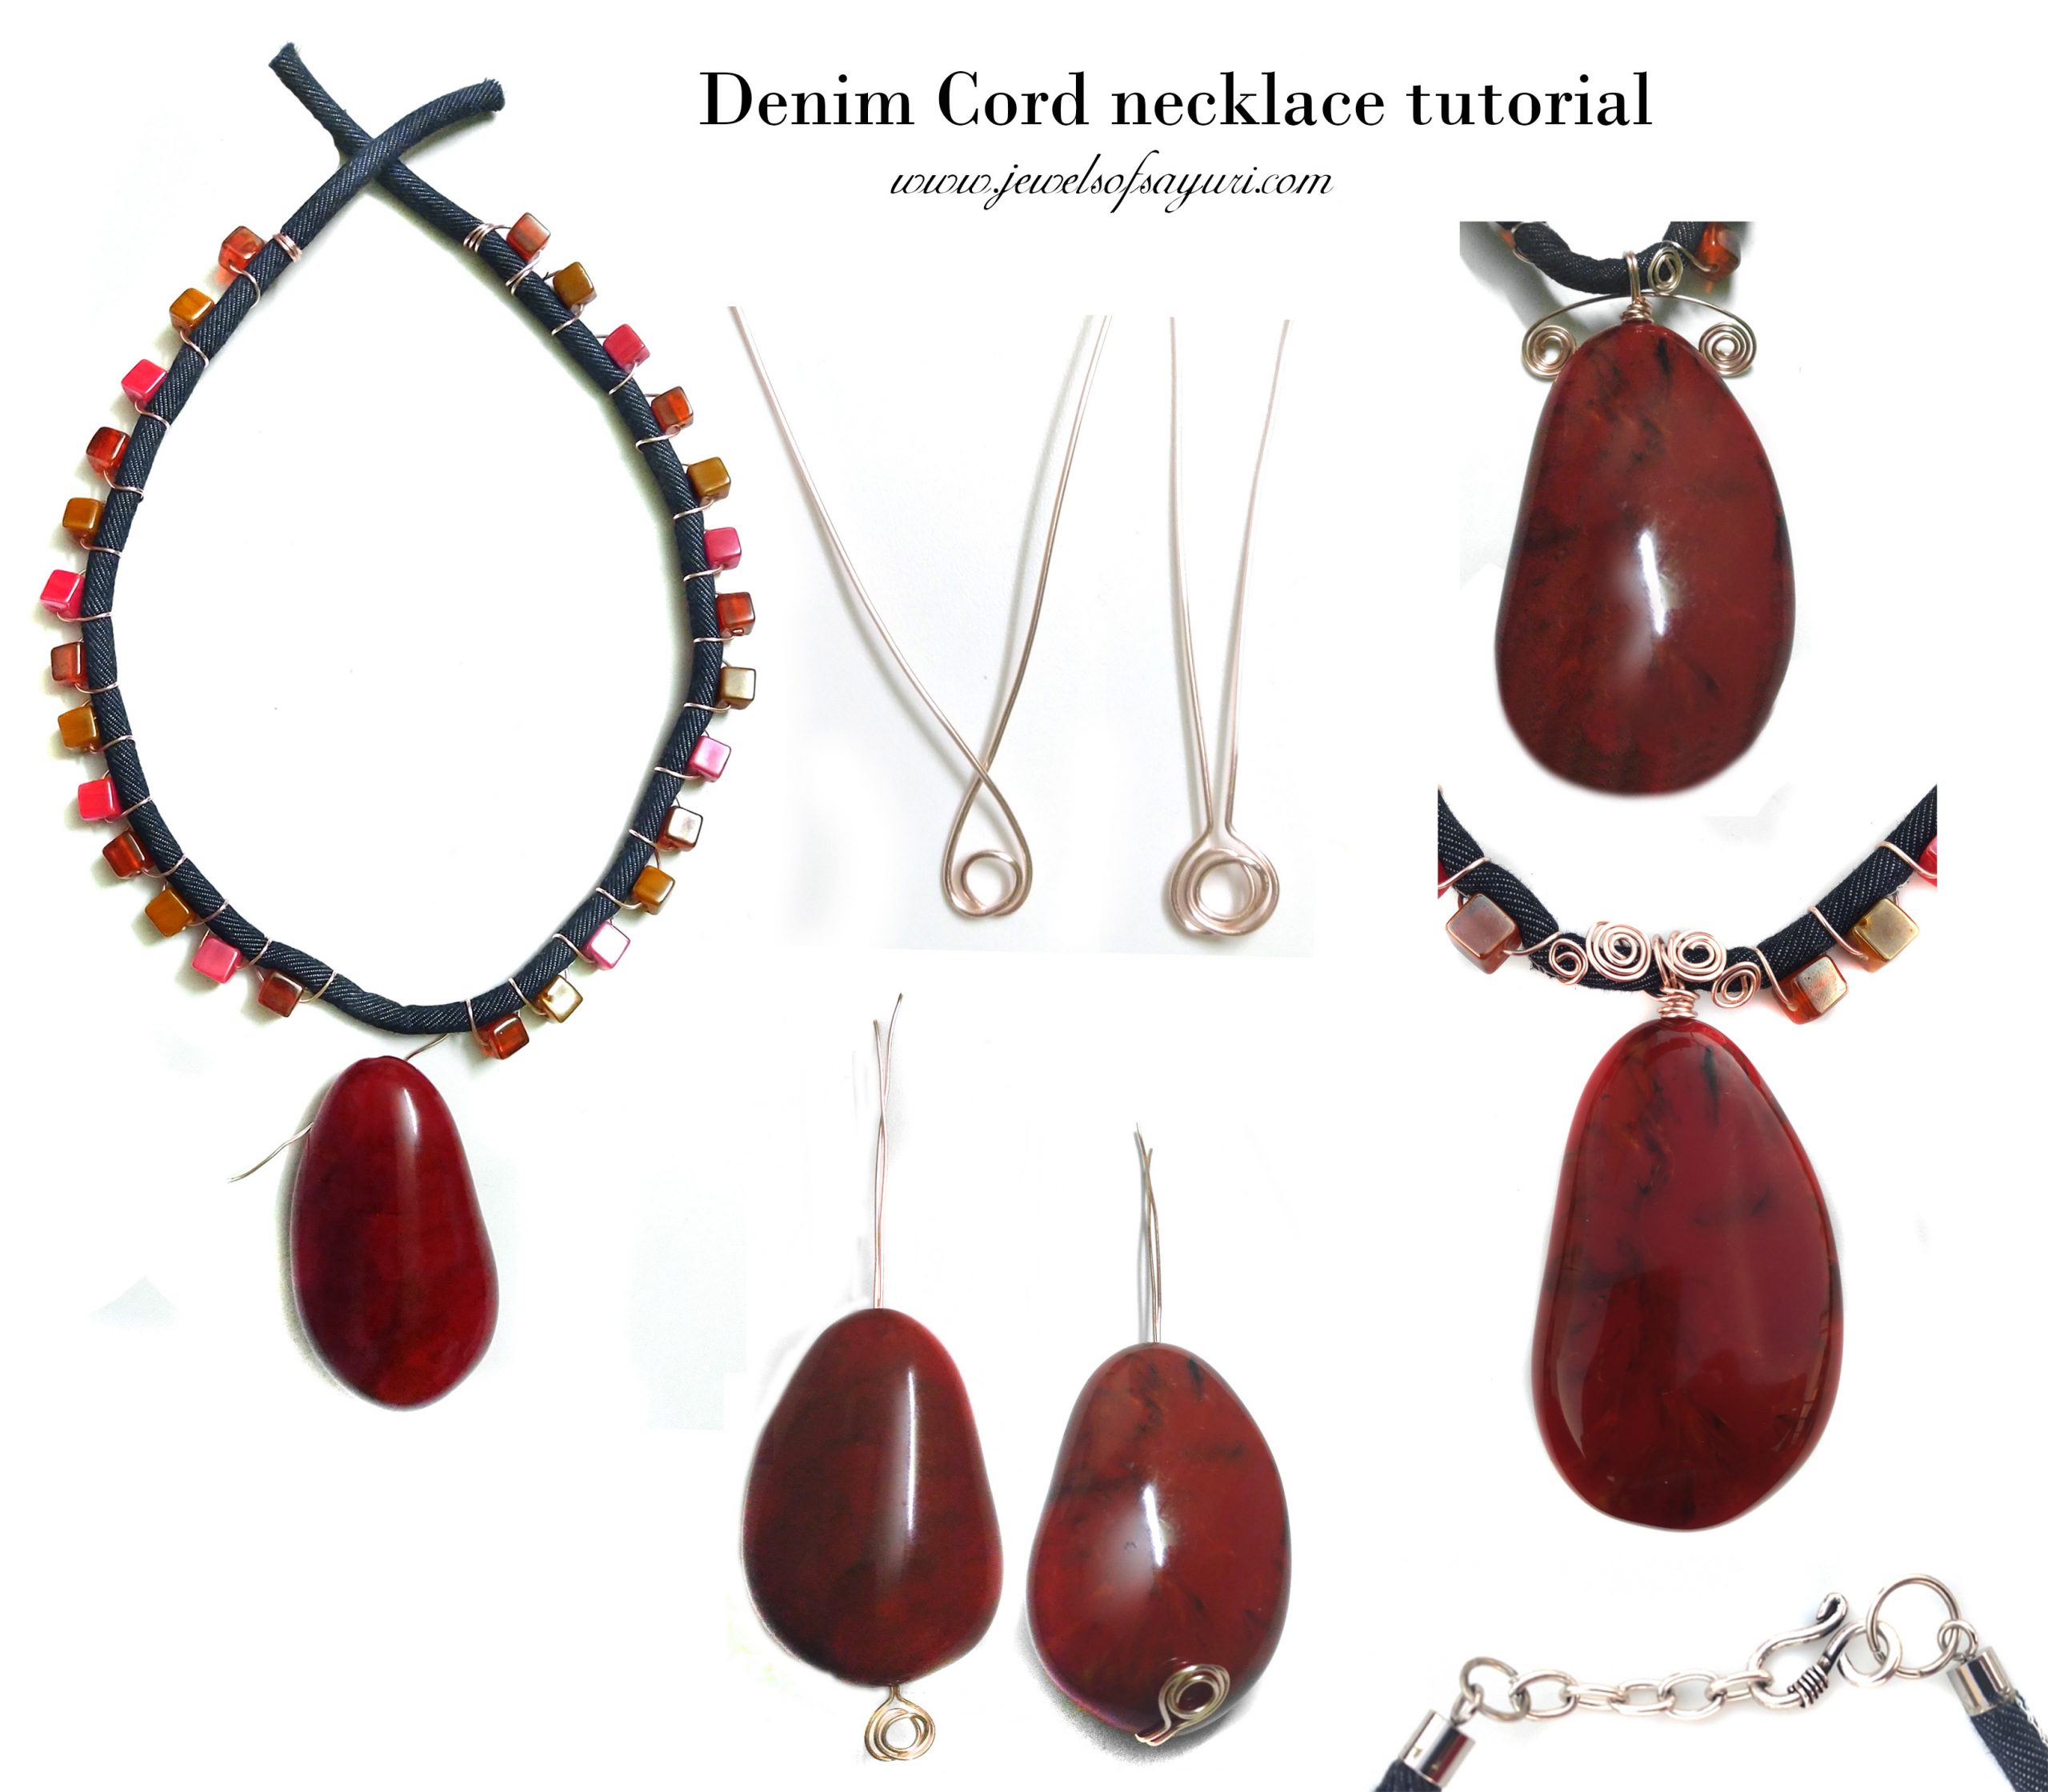 Denim cord necklace tutorial1